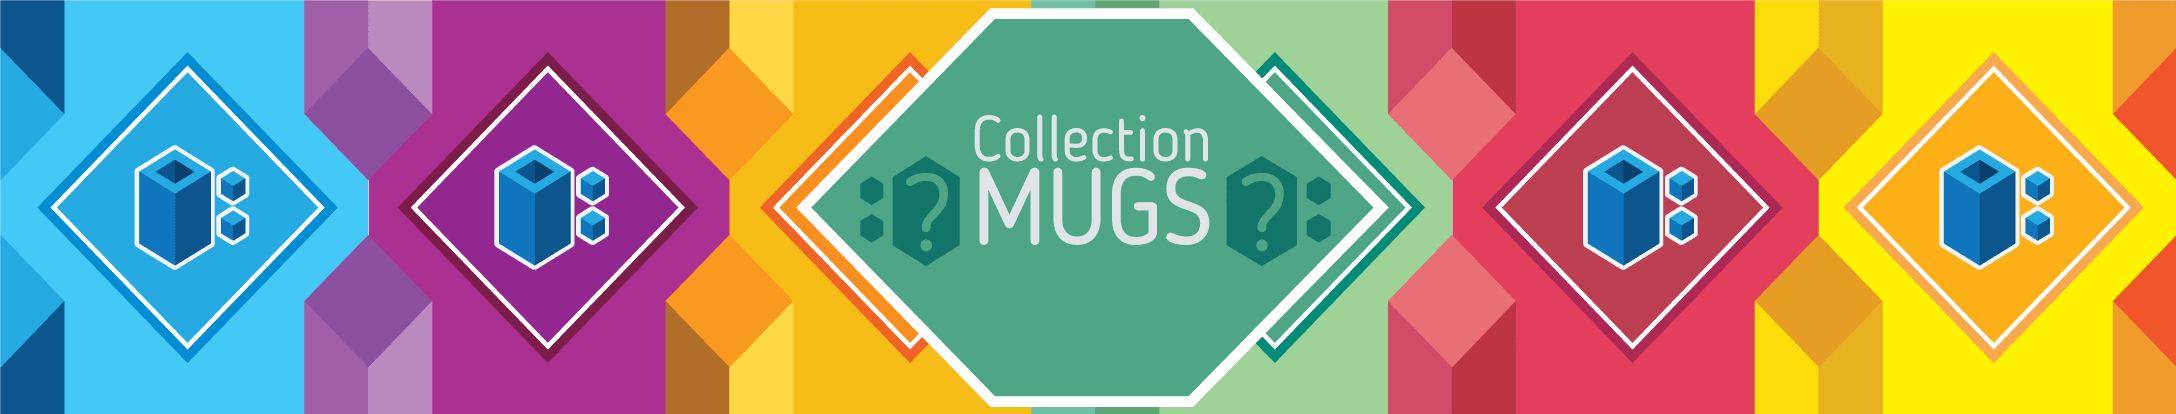 Sci-Fi Mugs Collection